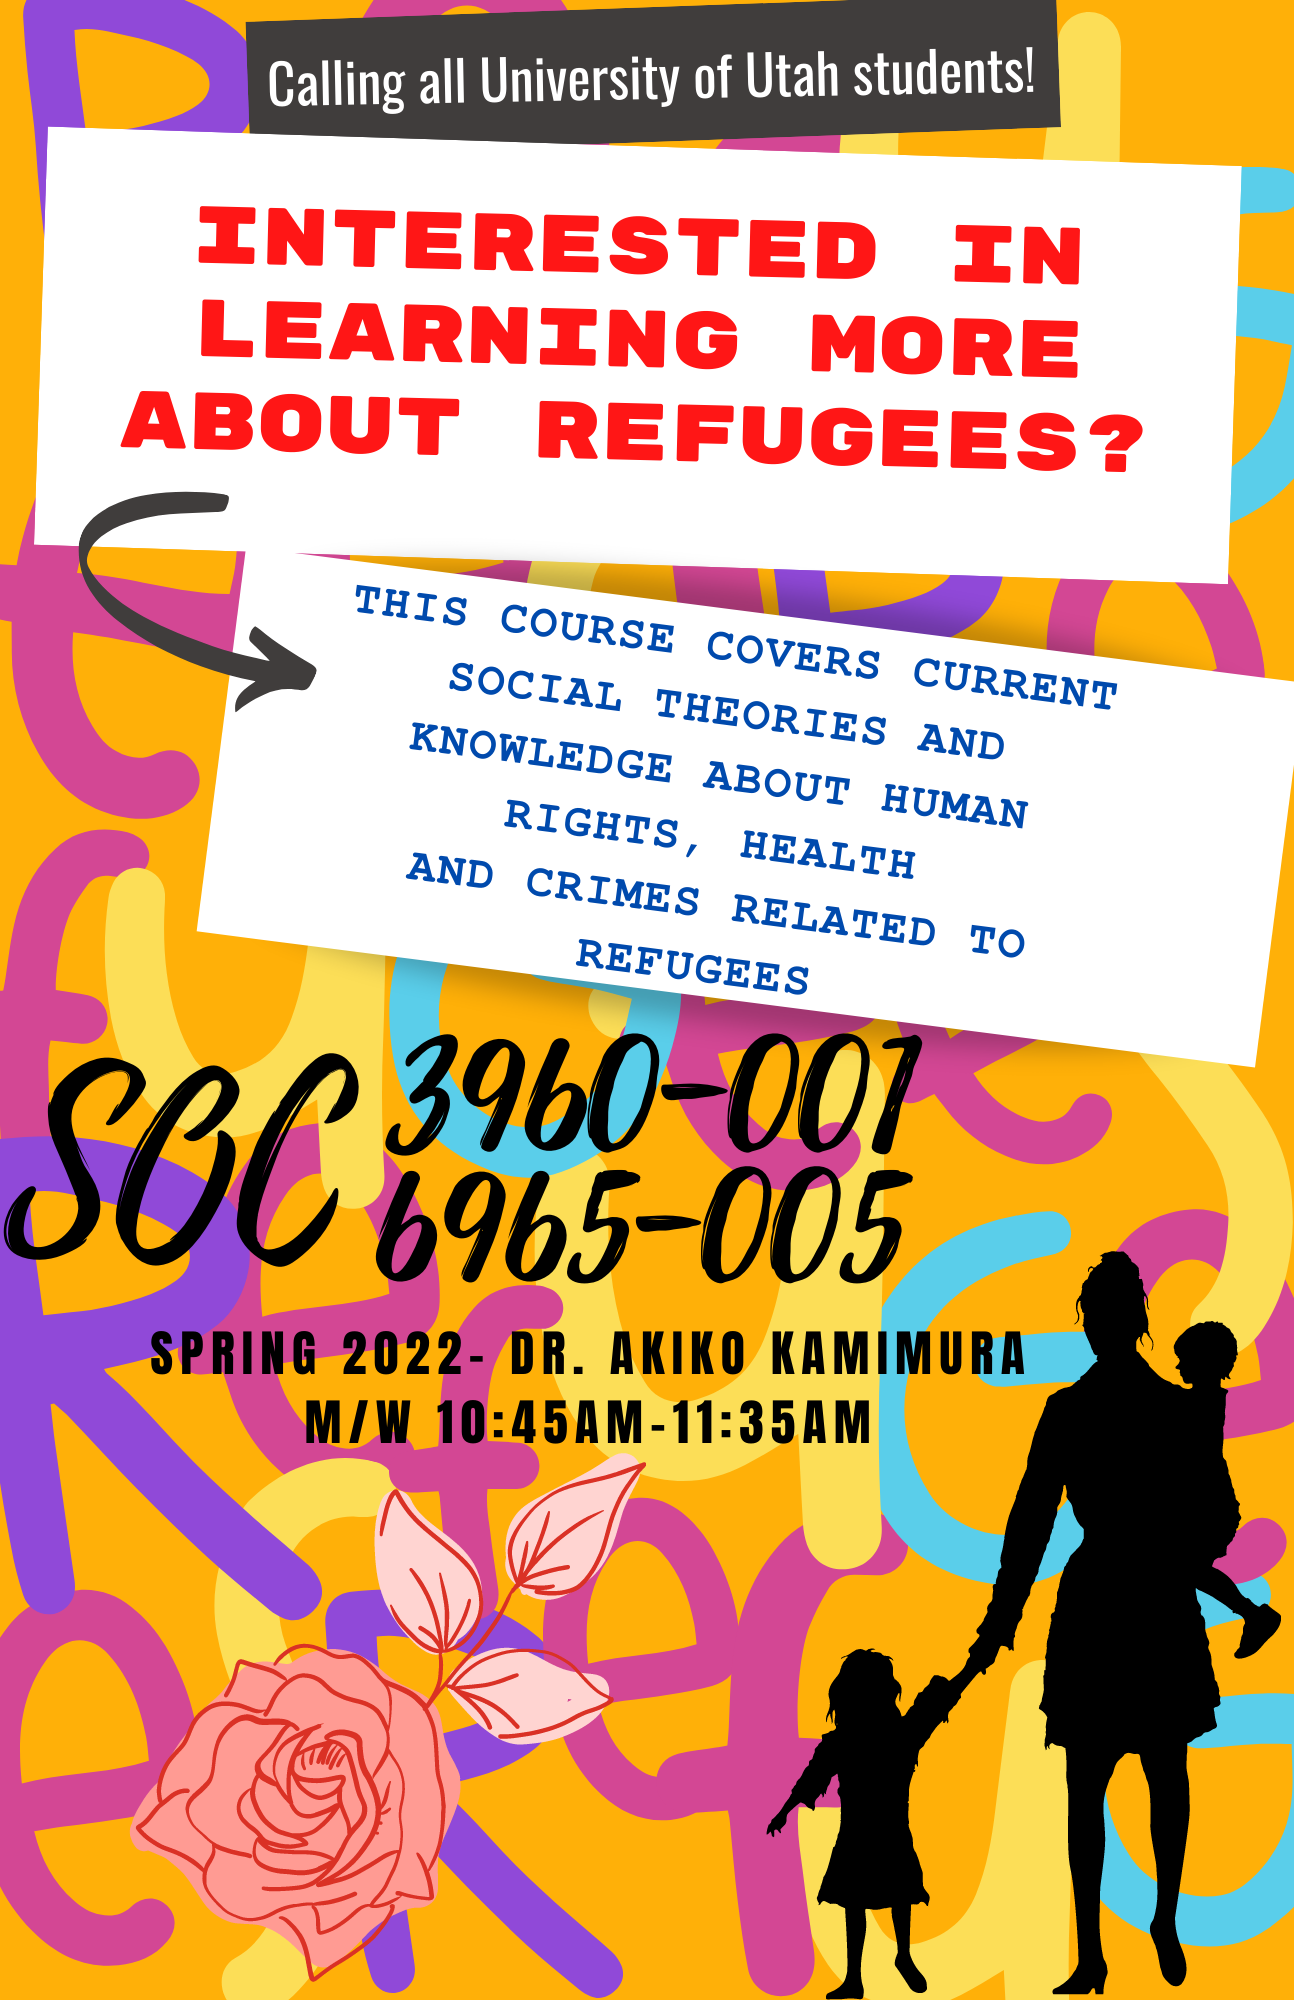 Refugee Soc 3960, 6965